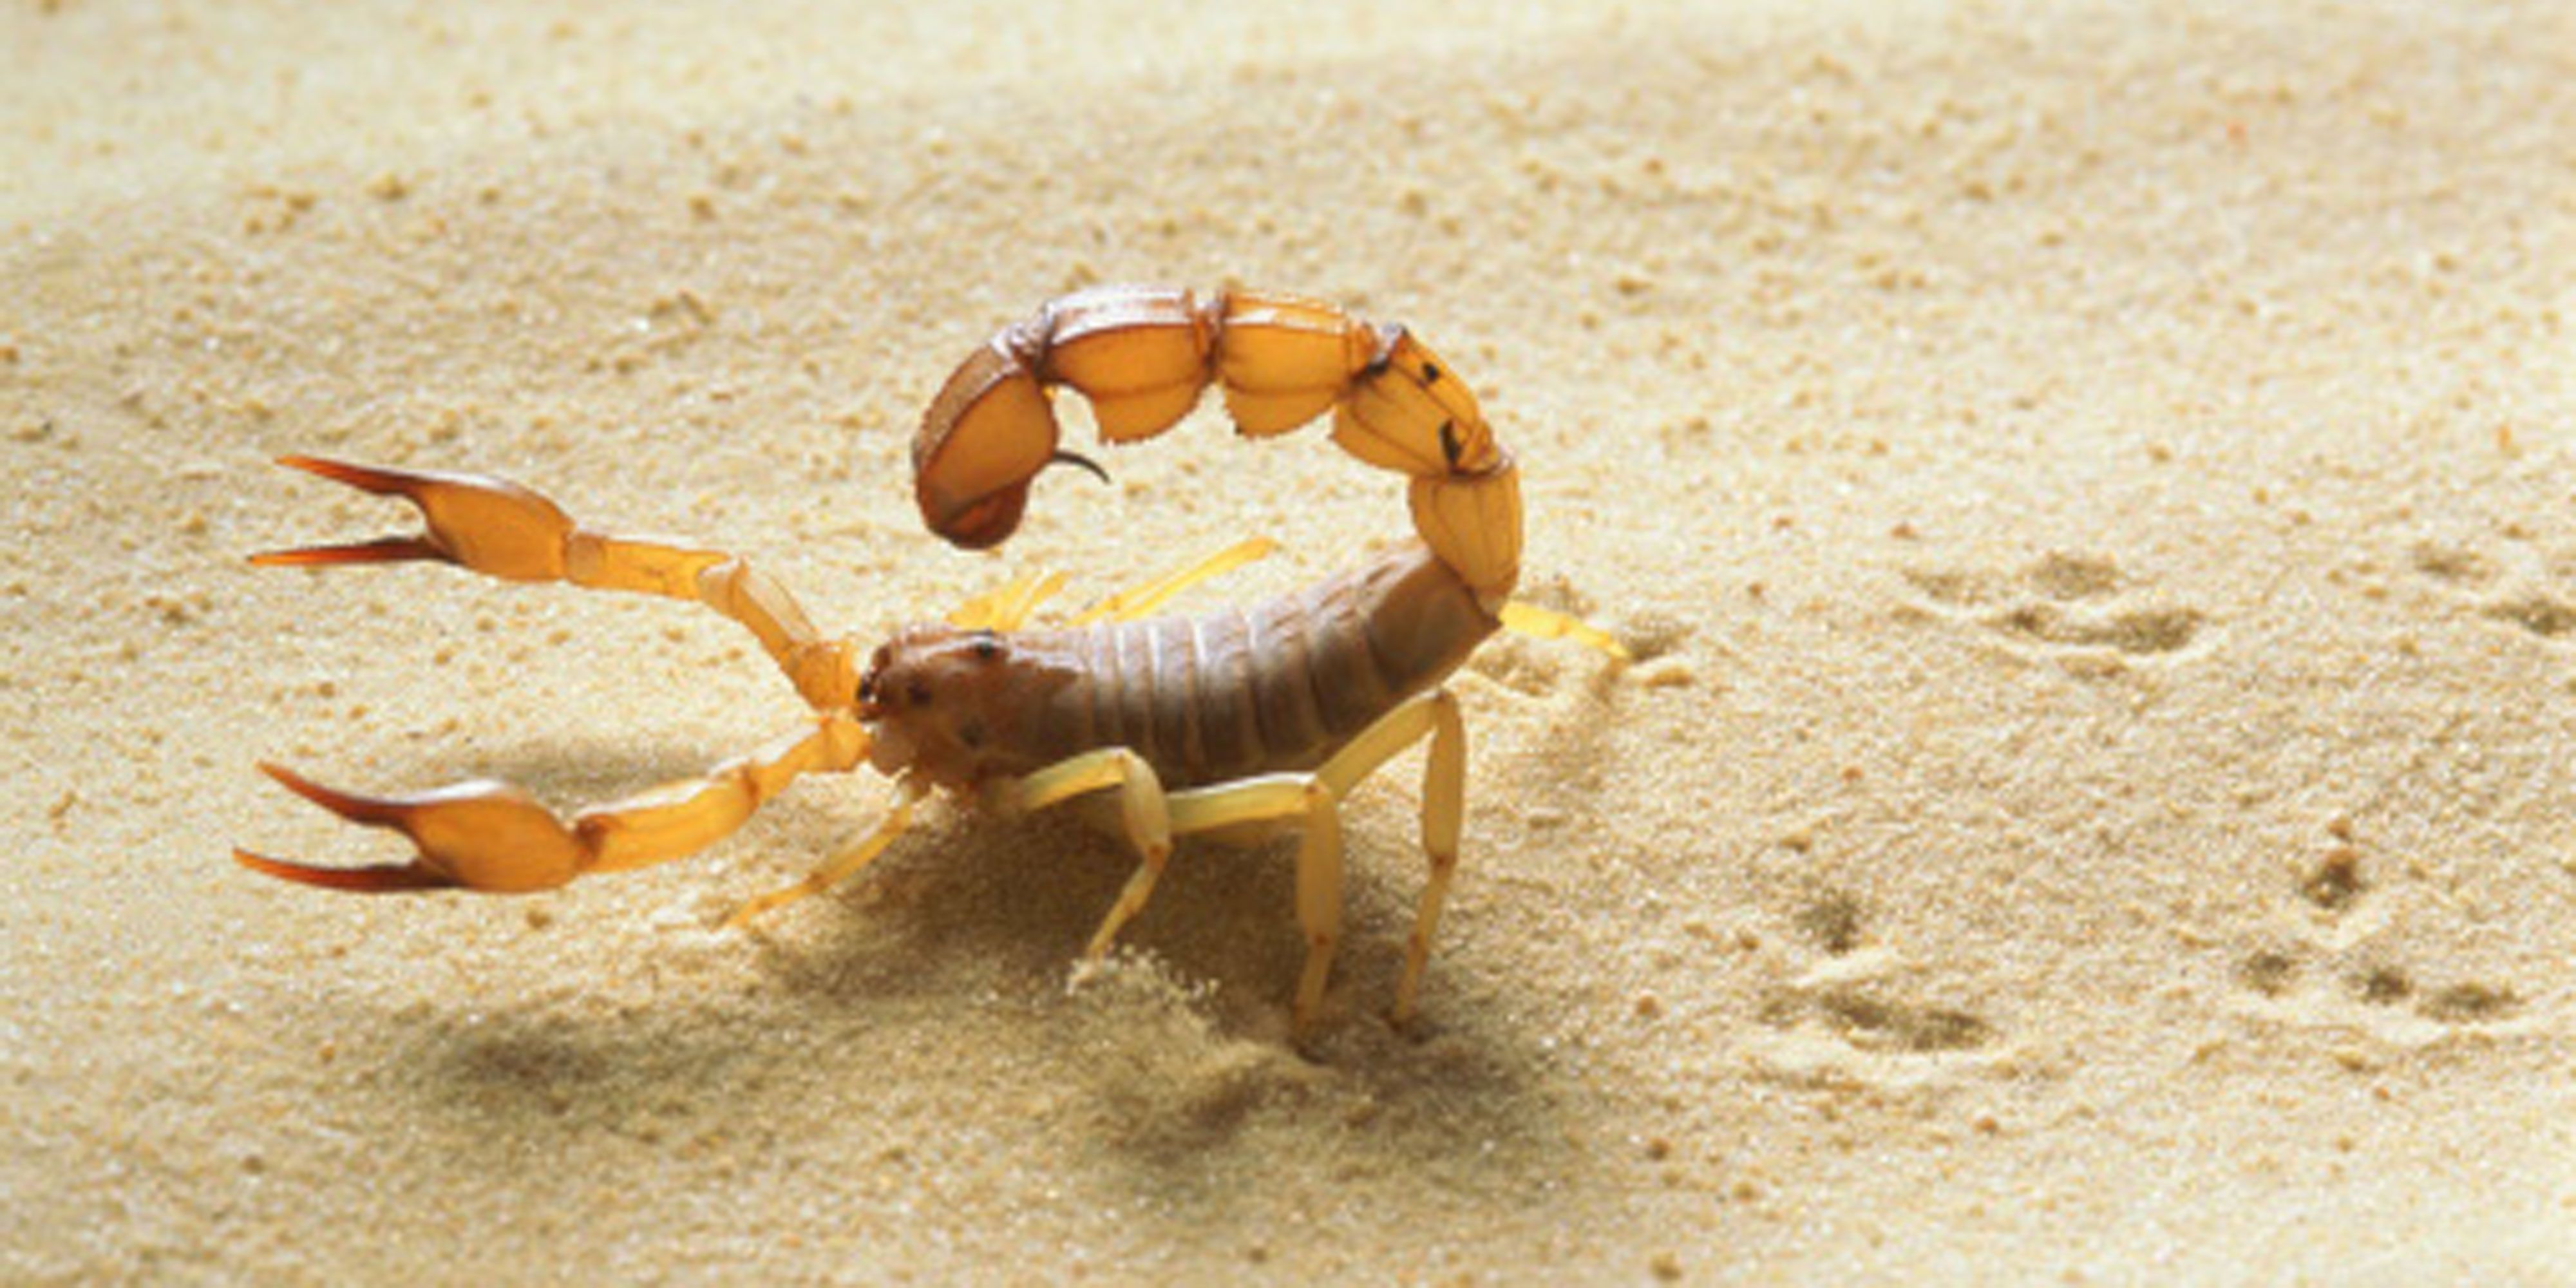 Scorpion stings and spider bites